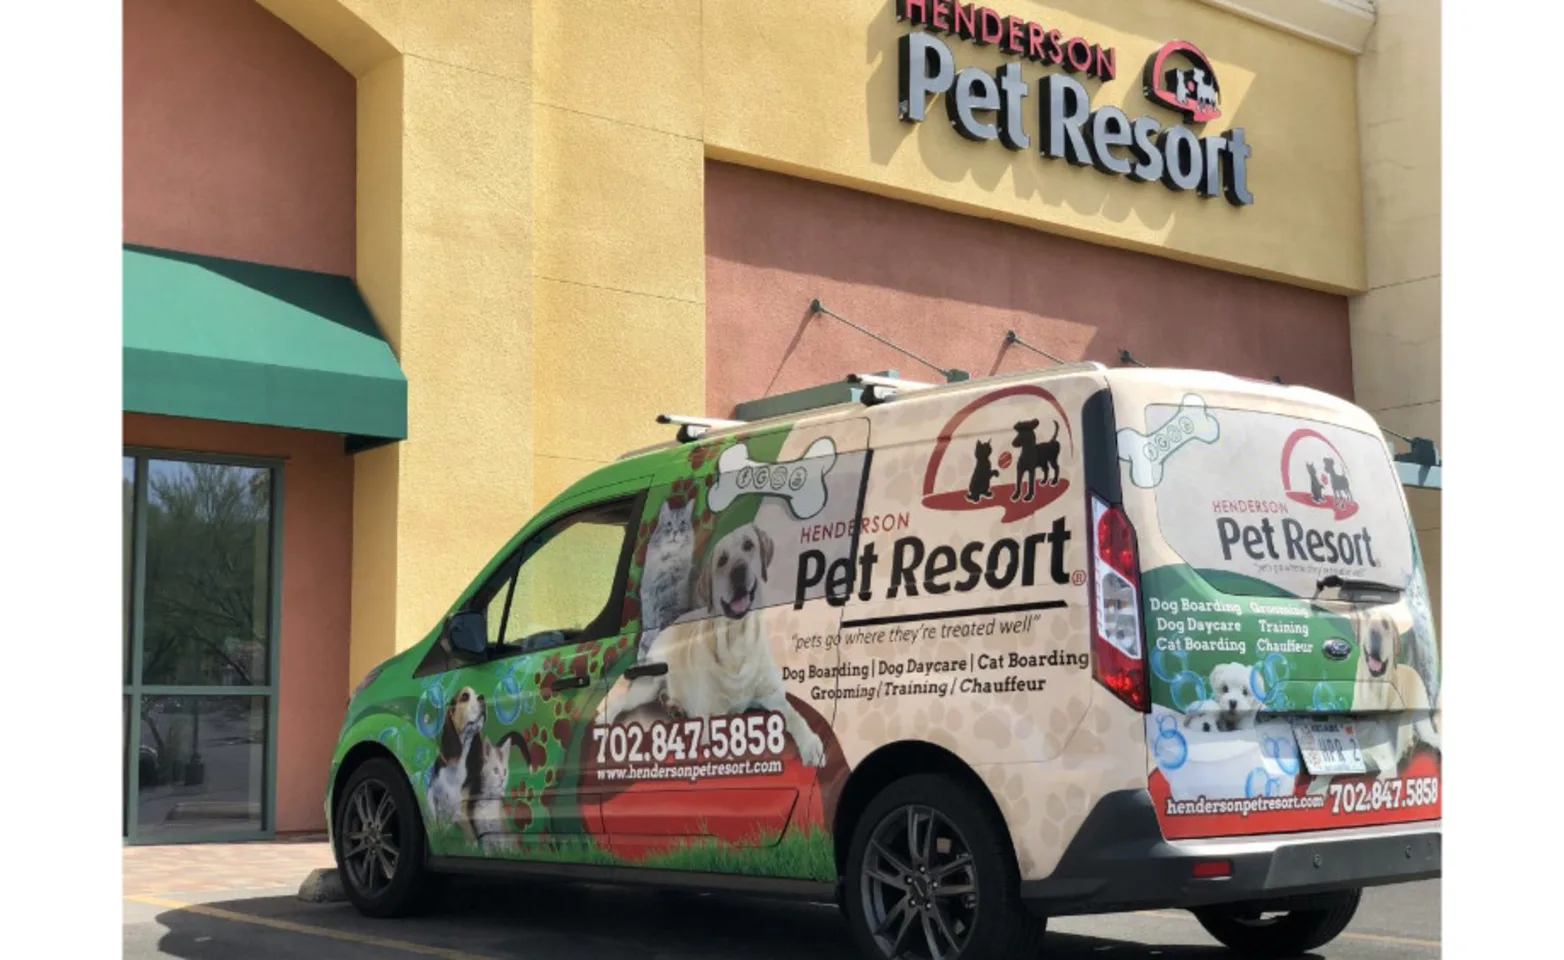 Henderson Pet Resort truck